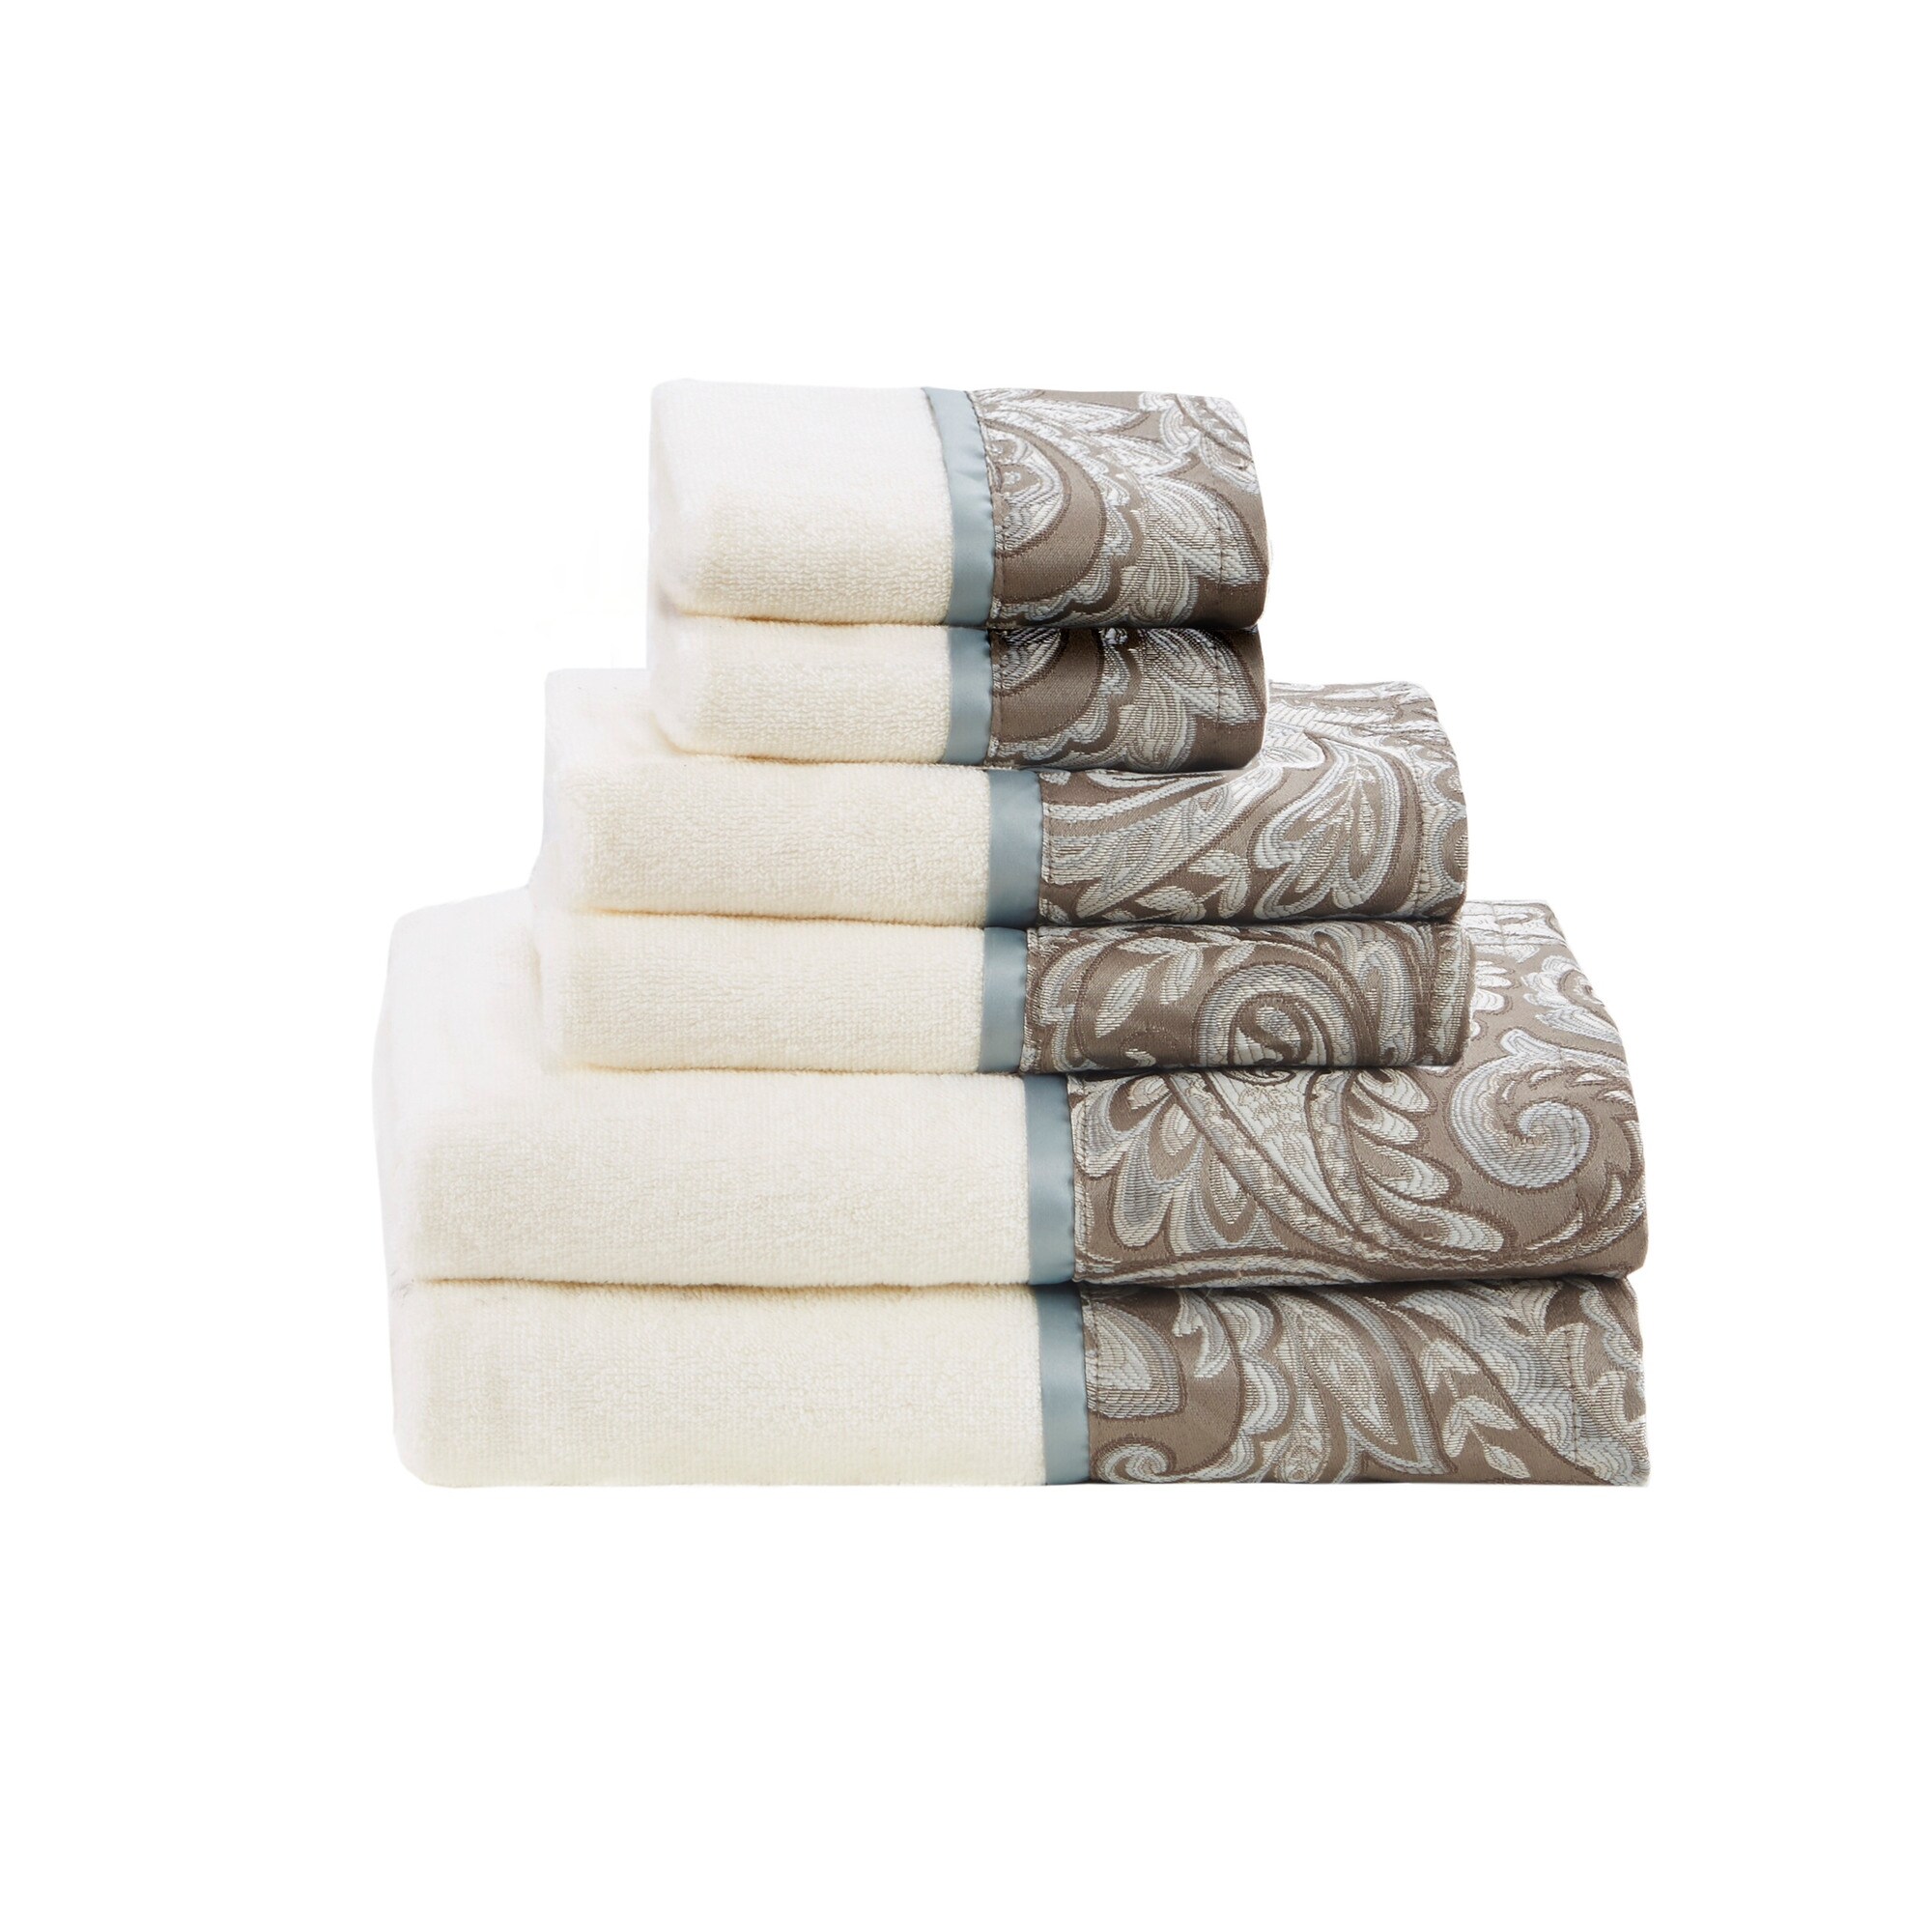 Martha Stewart 100% Cotton Geometric Jacquard Border Bath Towel - Blush, Size: 30 x 54